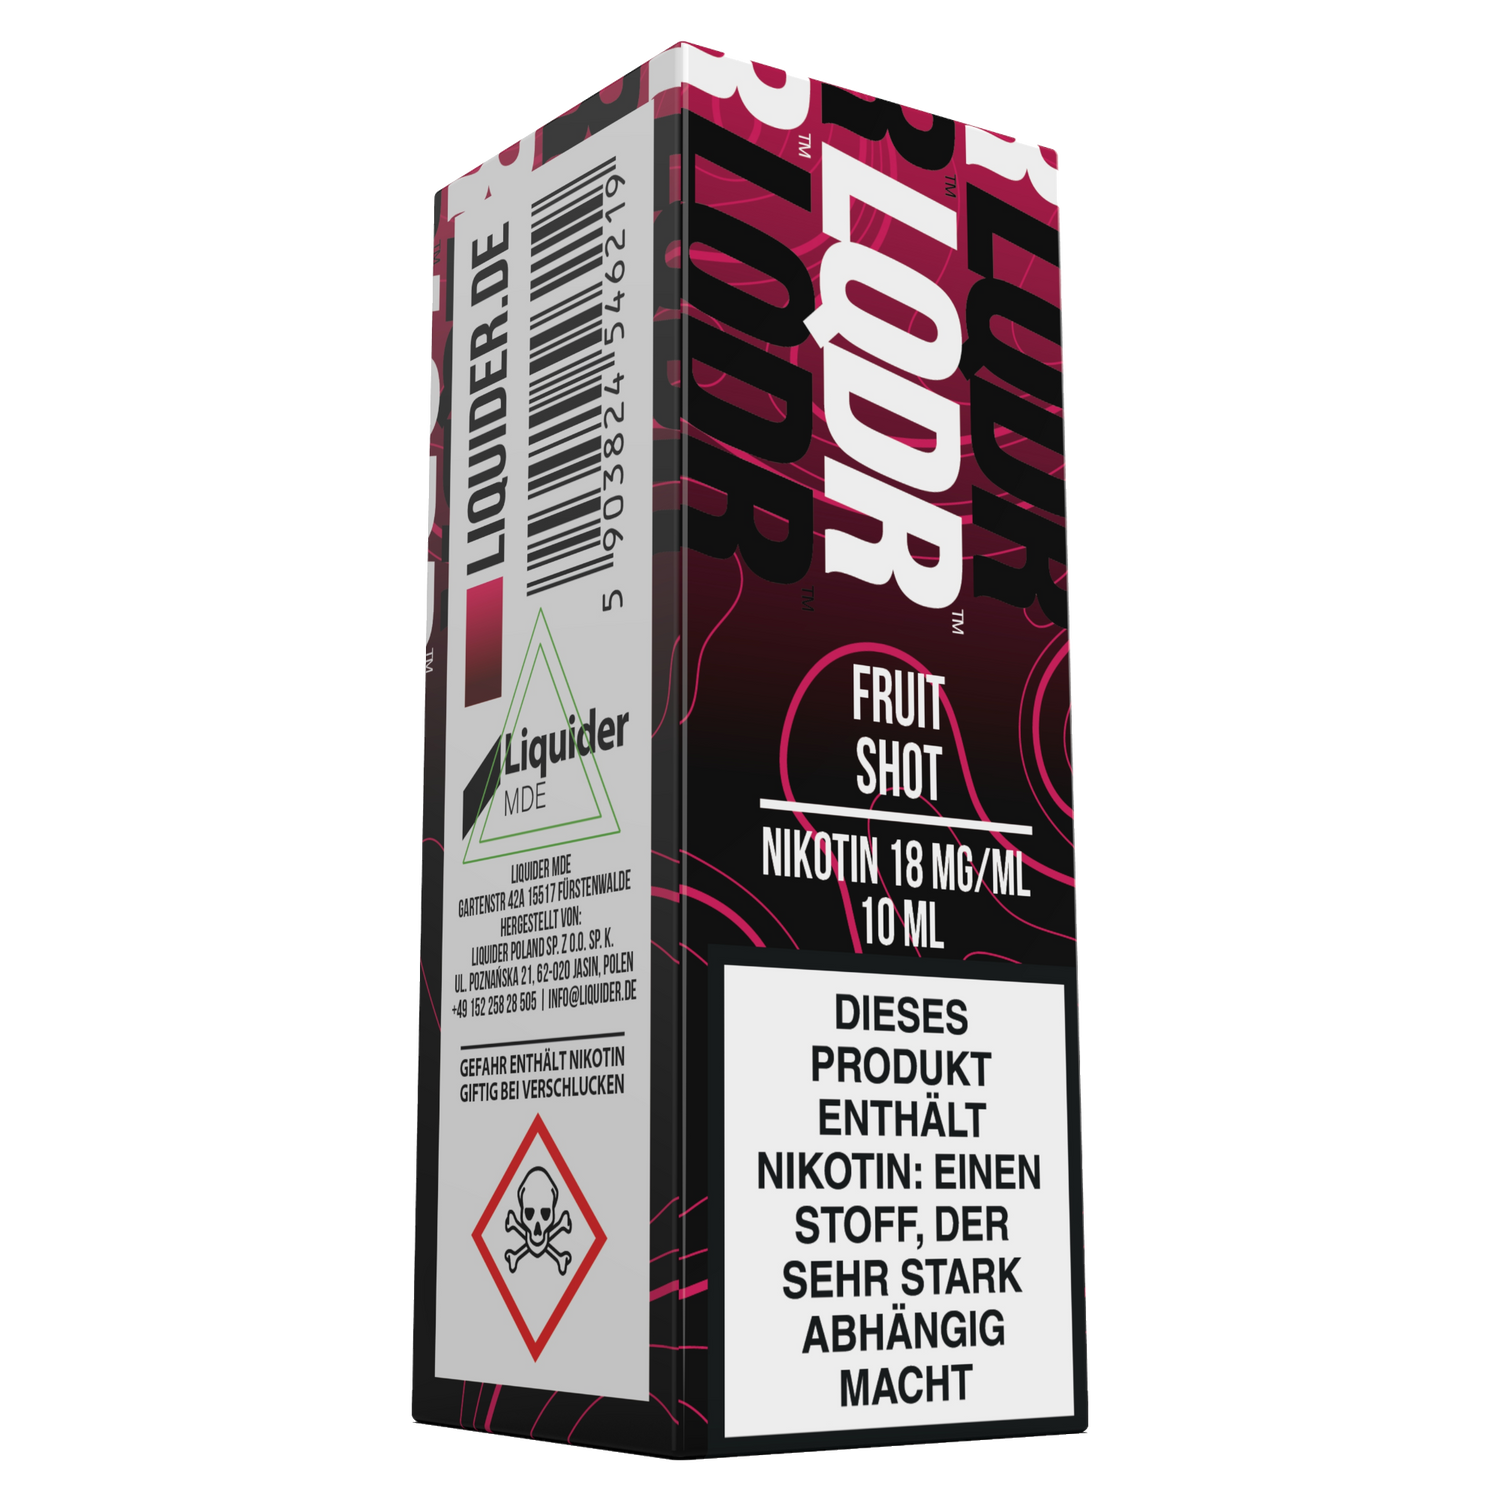 Liquider - Fruit Shot E-Zigaretten Liquid 12 mg/ml